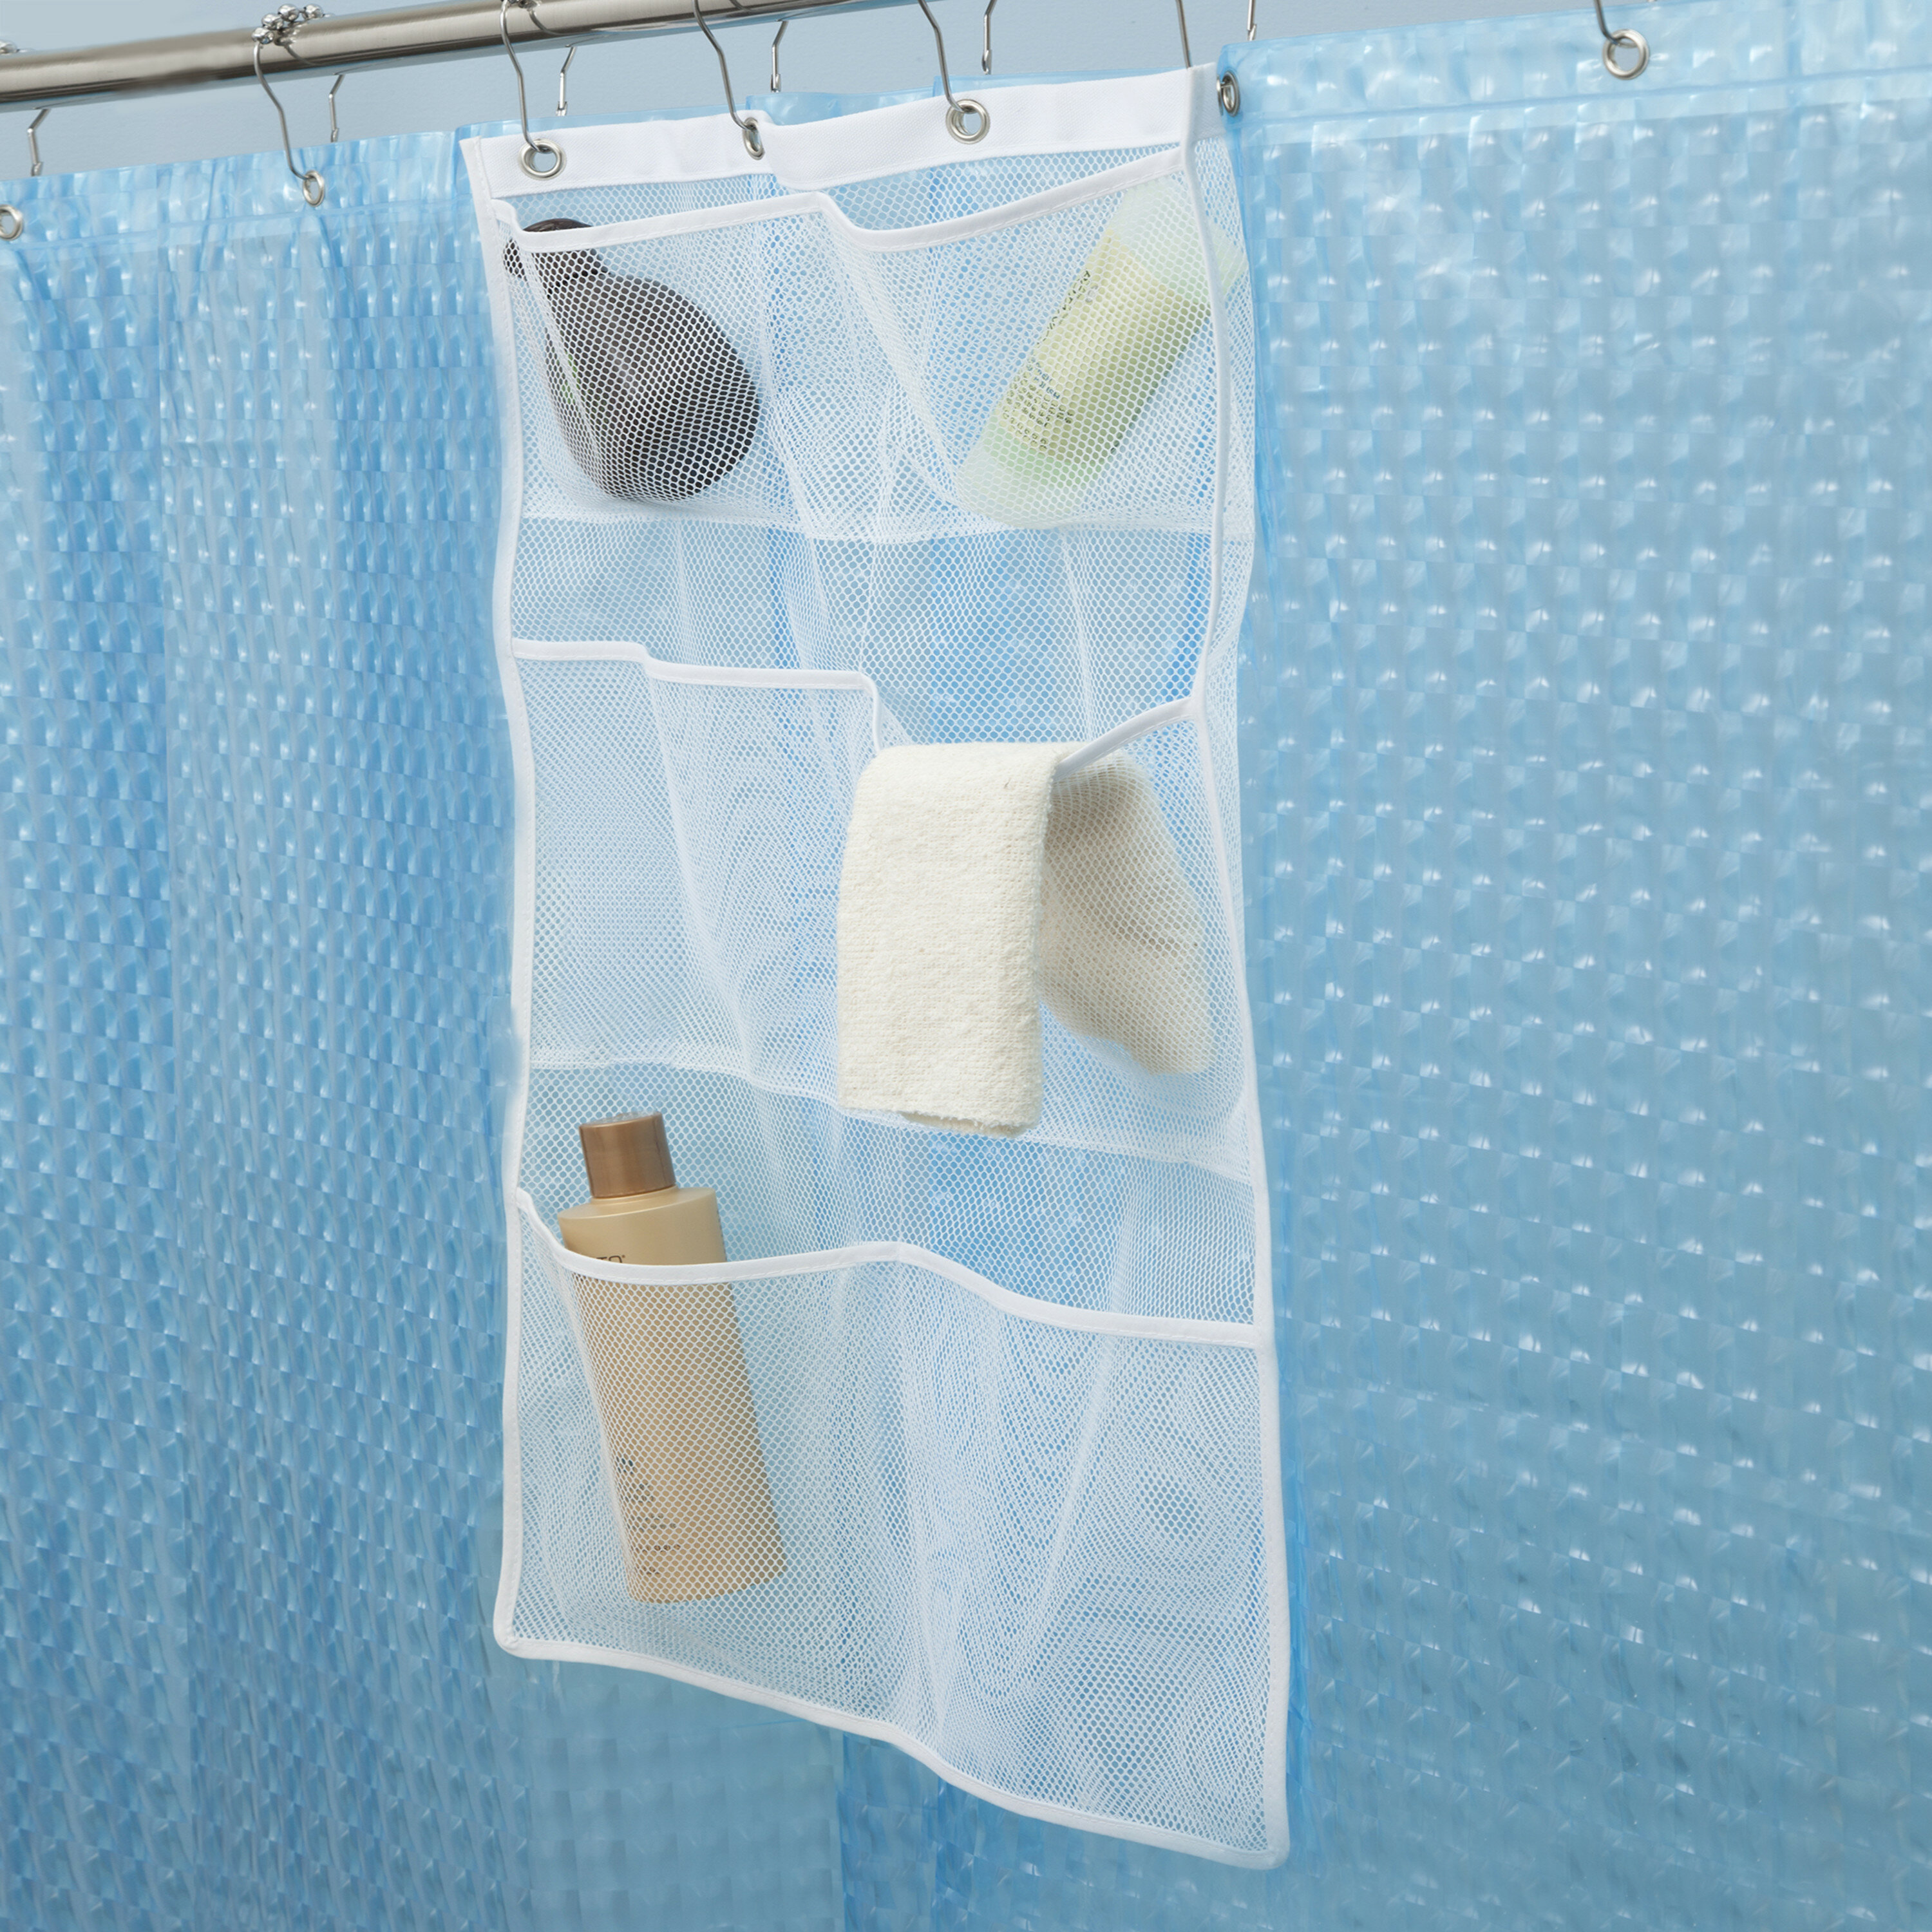 Kenney 4-Pocket Hanging Mesh Suction Shower Organization Caddy, White